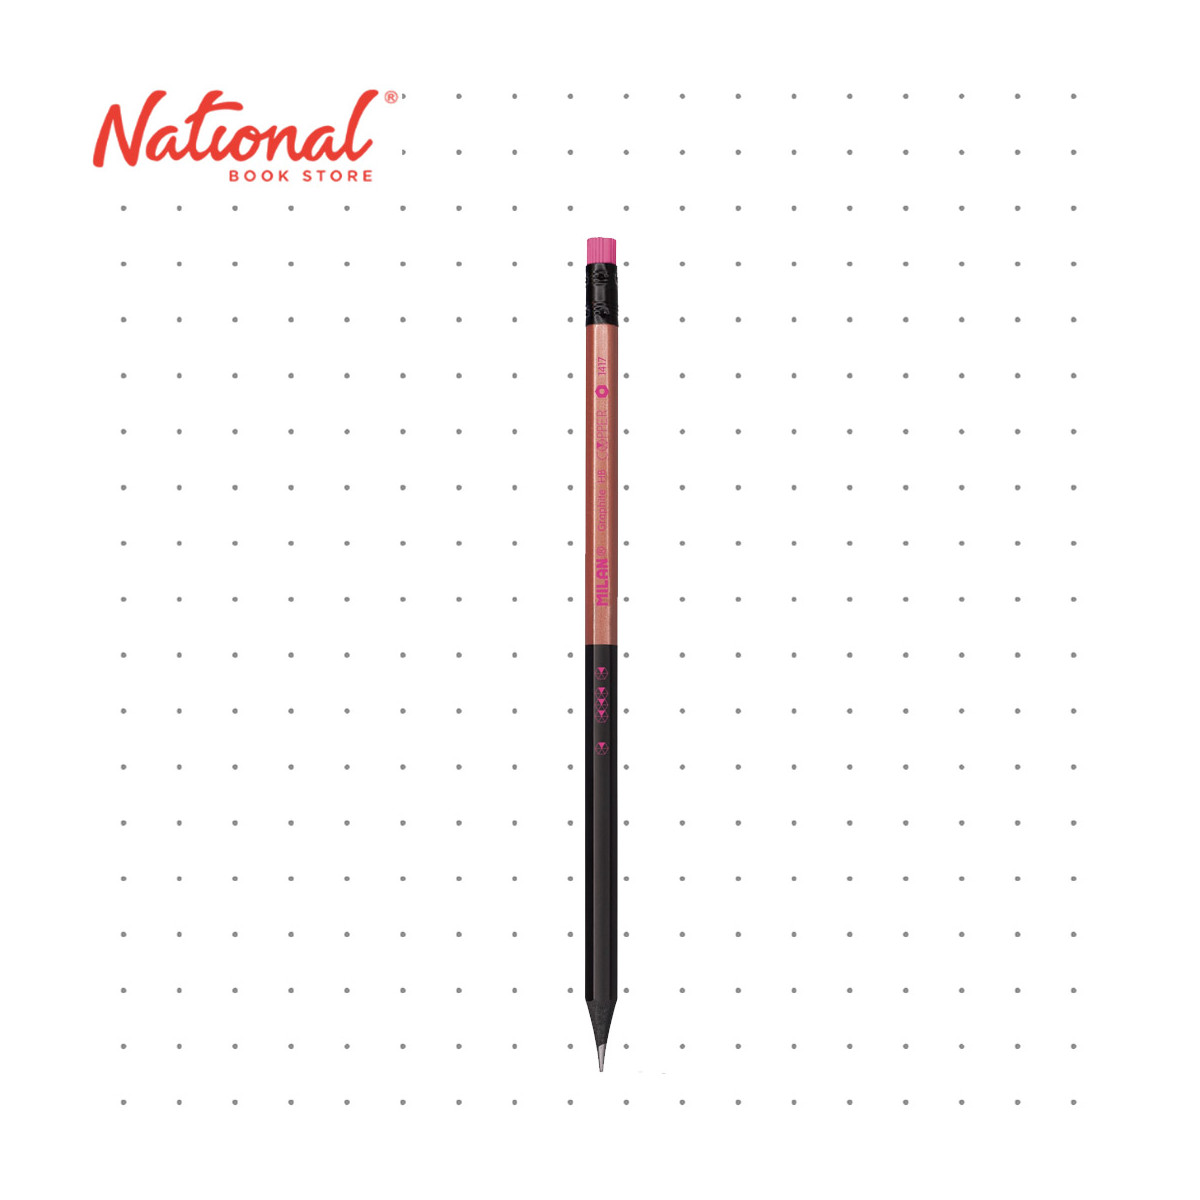 MILAN HB graphite pencil with Sunset eraser